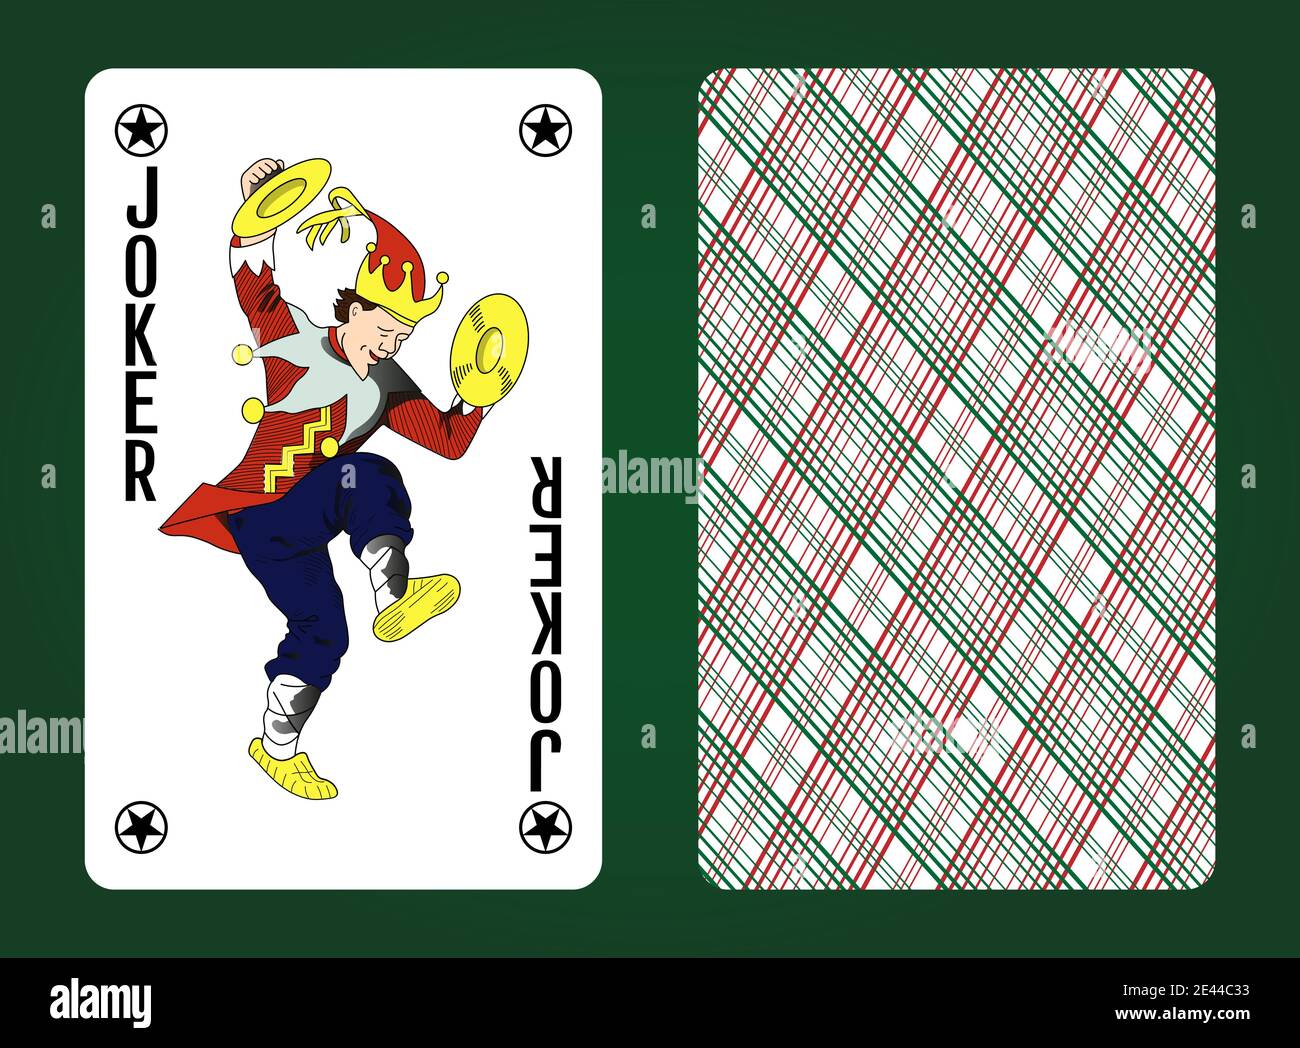 Joker card illustration Stock Vector Images - Alamy